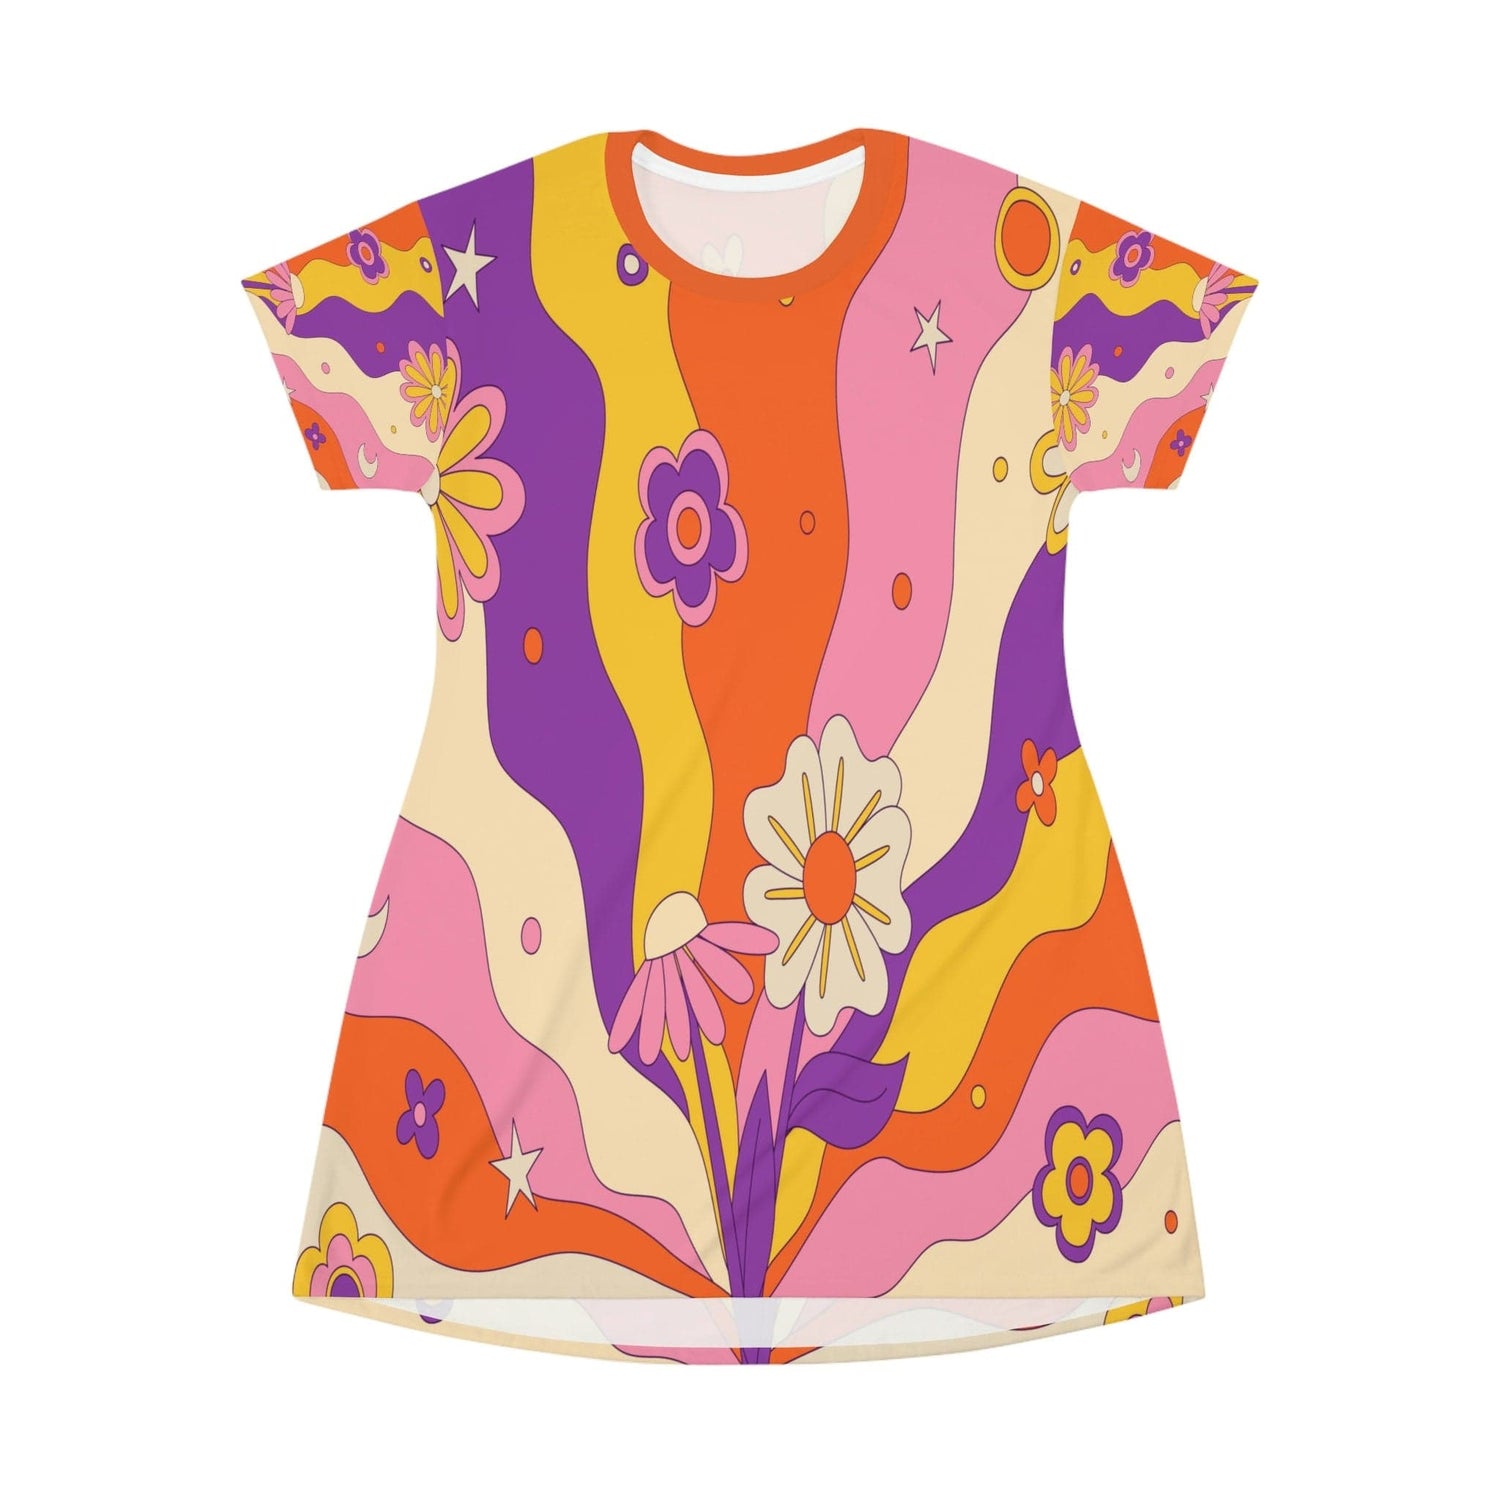 Kate McEnroe New York Retro 60s, 70s Groovy Hippie Flower Power Boho Party Dress in Mid Century Modern Beige, Burnt Orange, Mustard Yellow, Purple, Pink T-Shirt Dress M 24809219195907777729